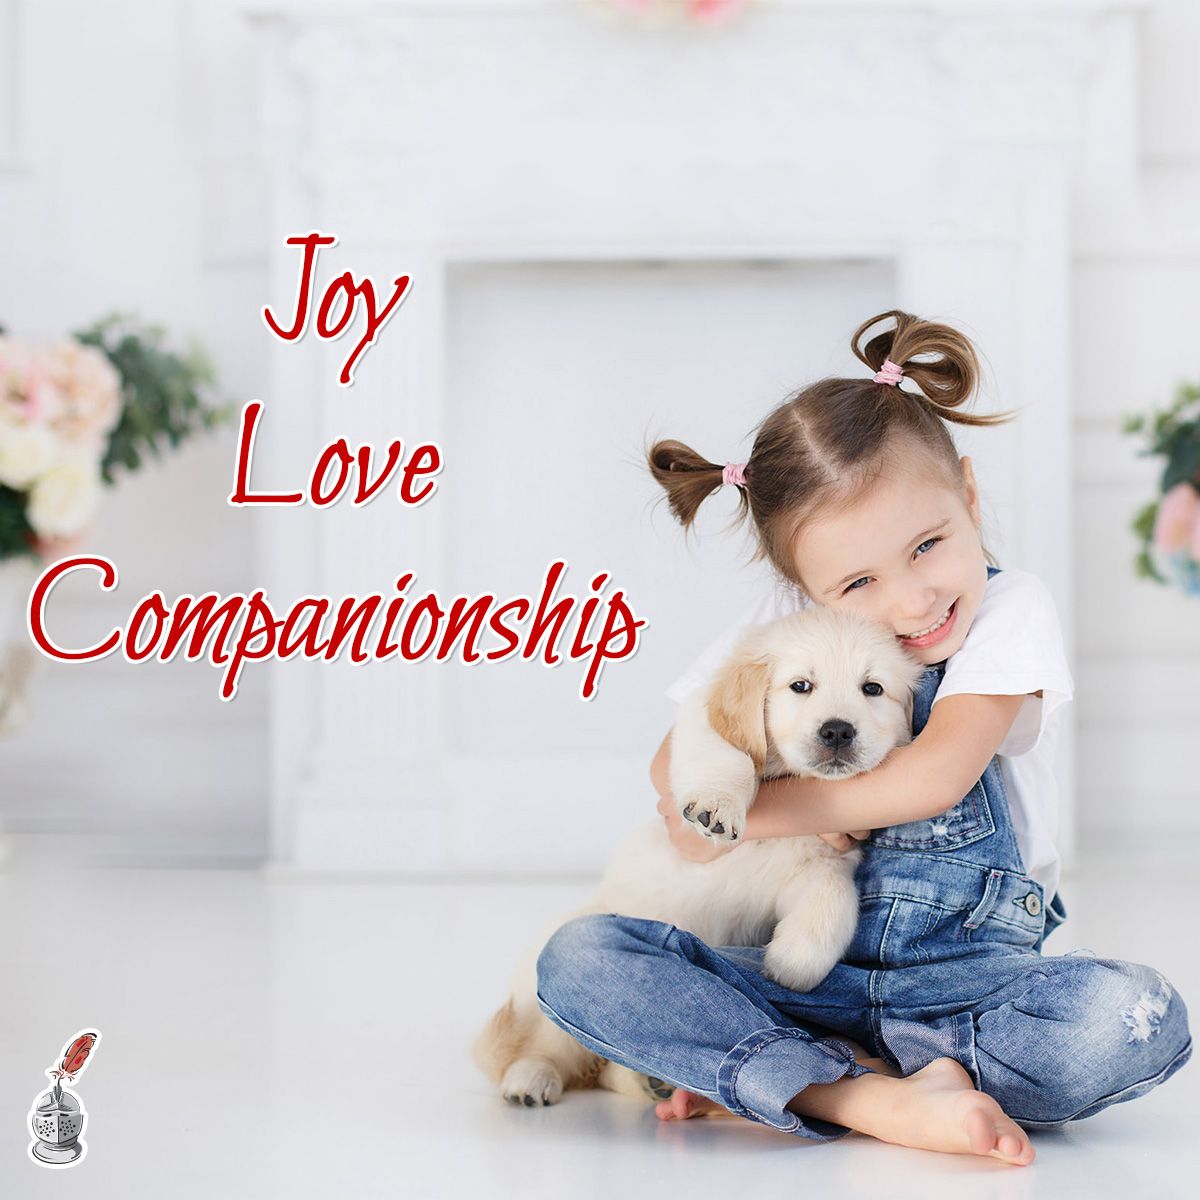 Joy, Love, Companionship